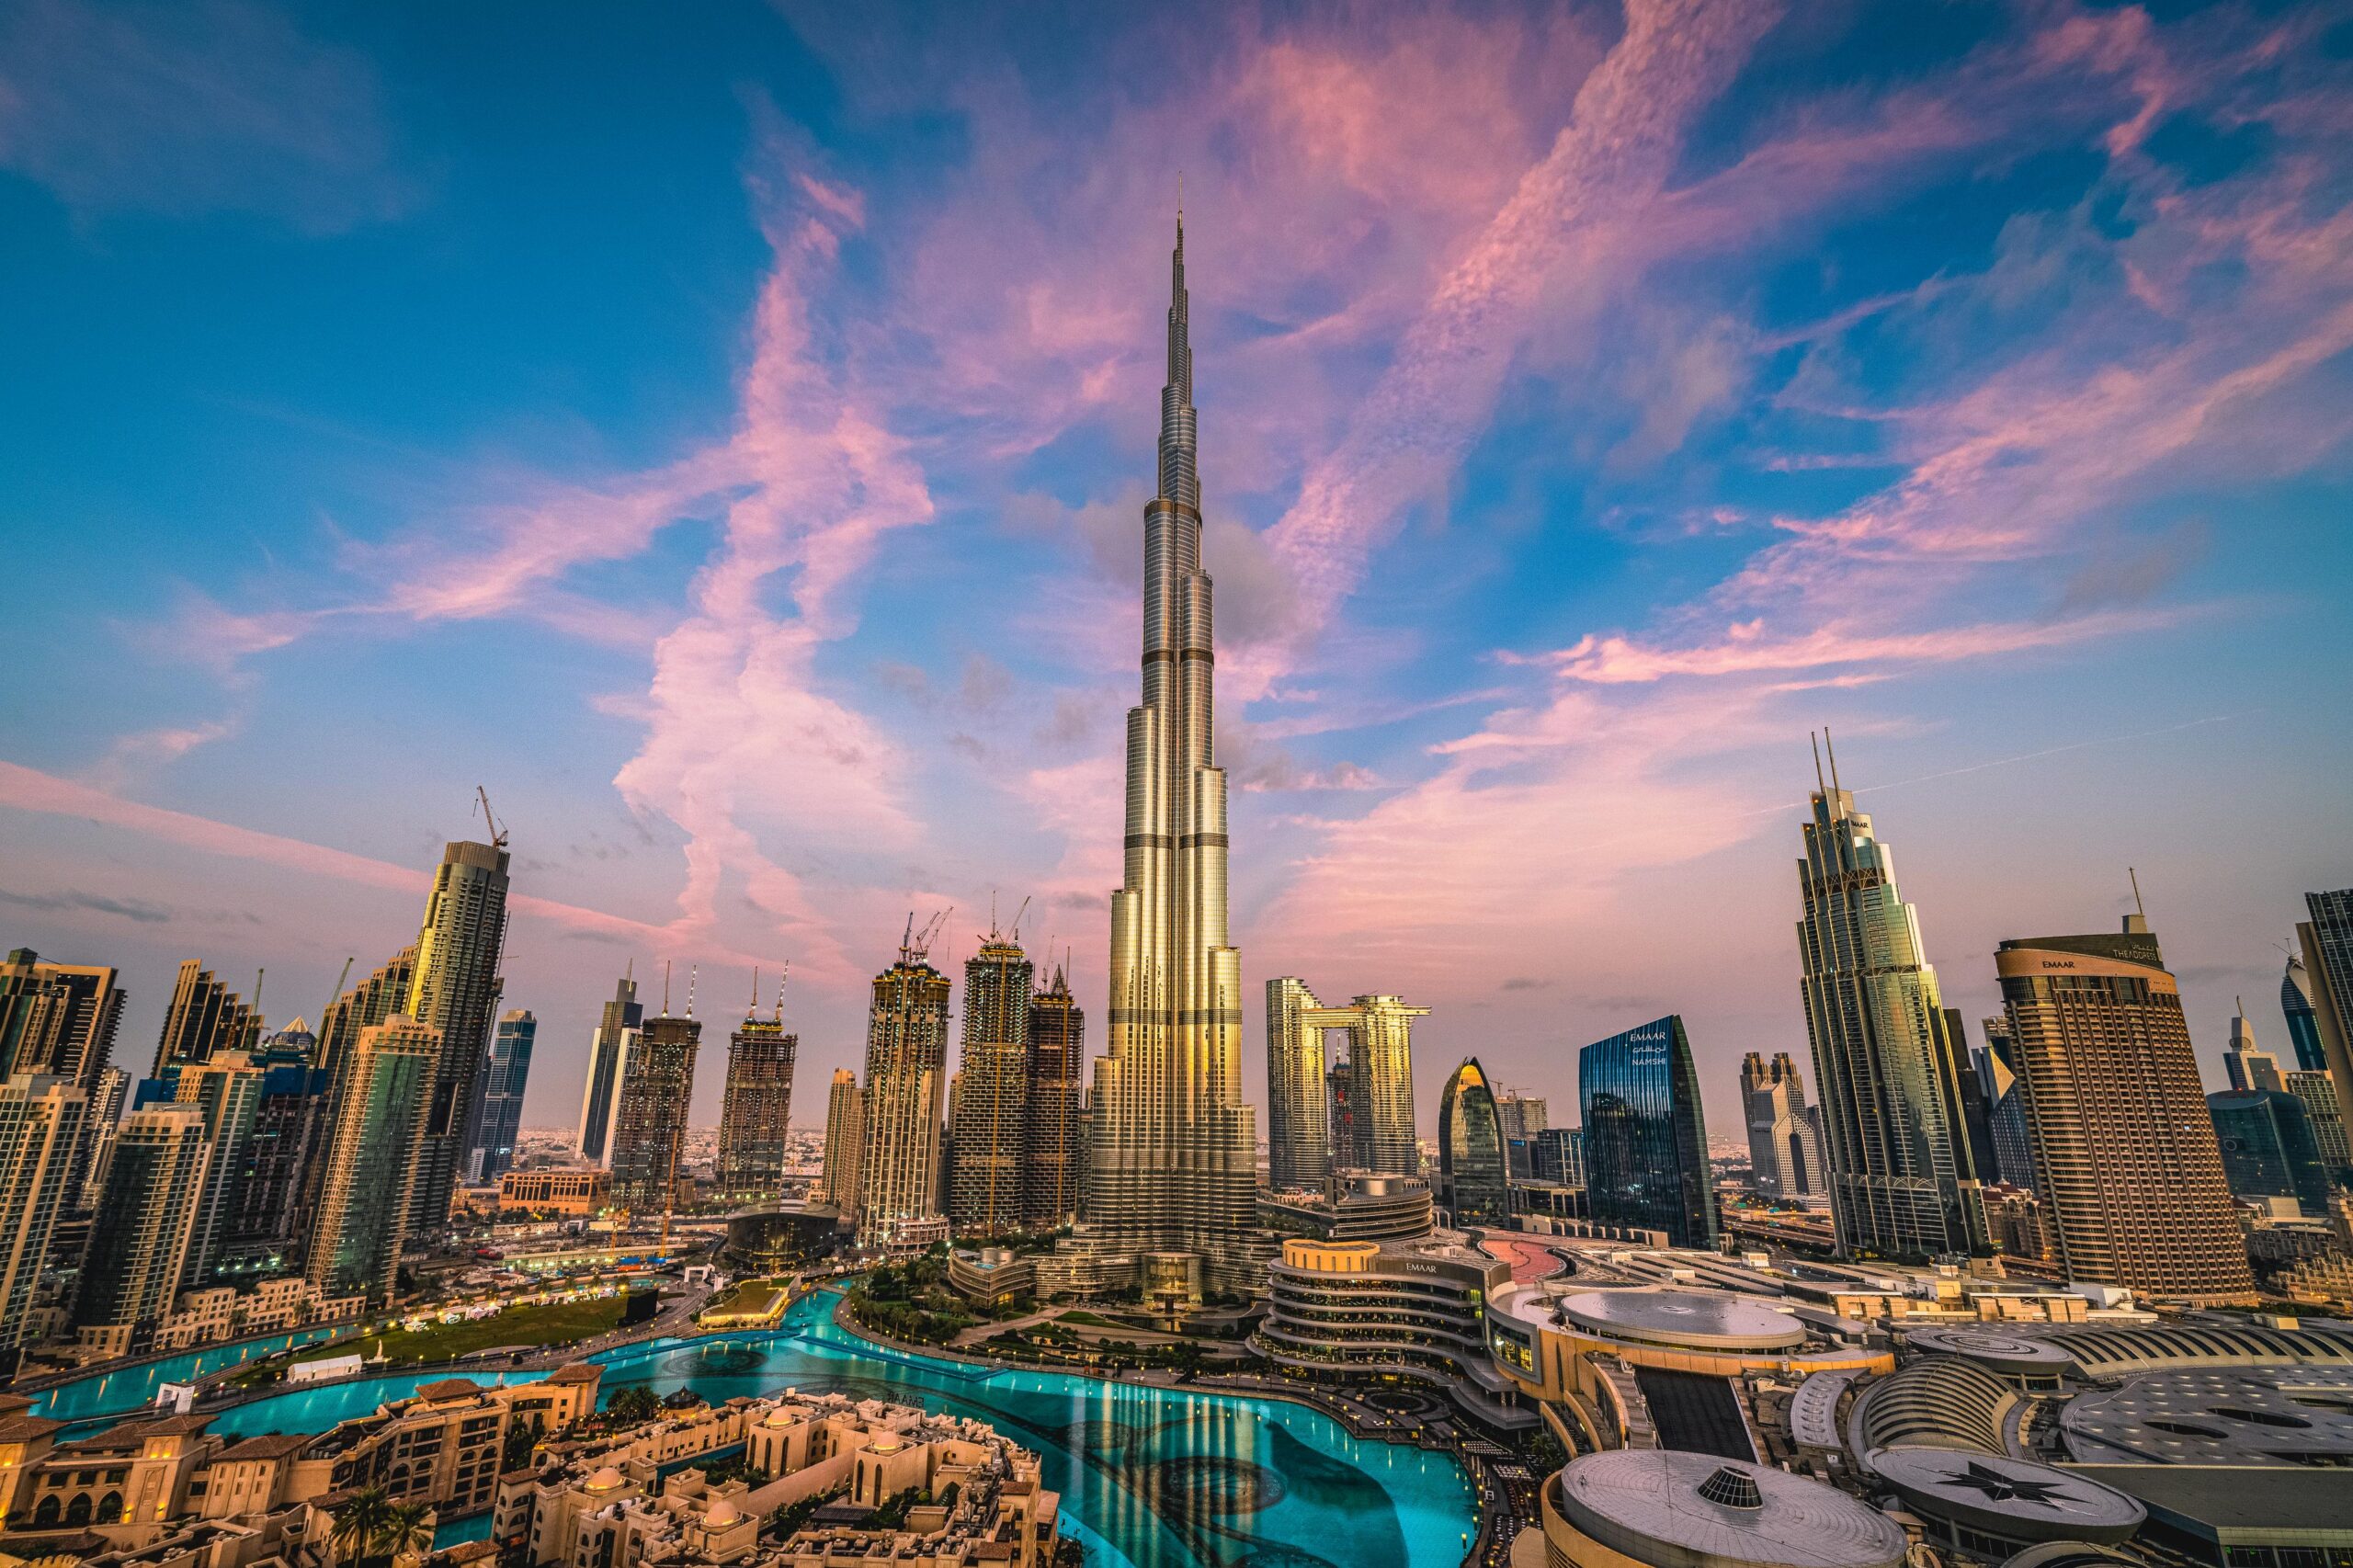 Dubai Sky View